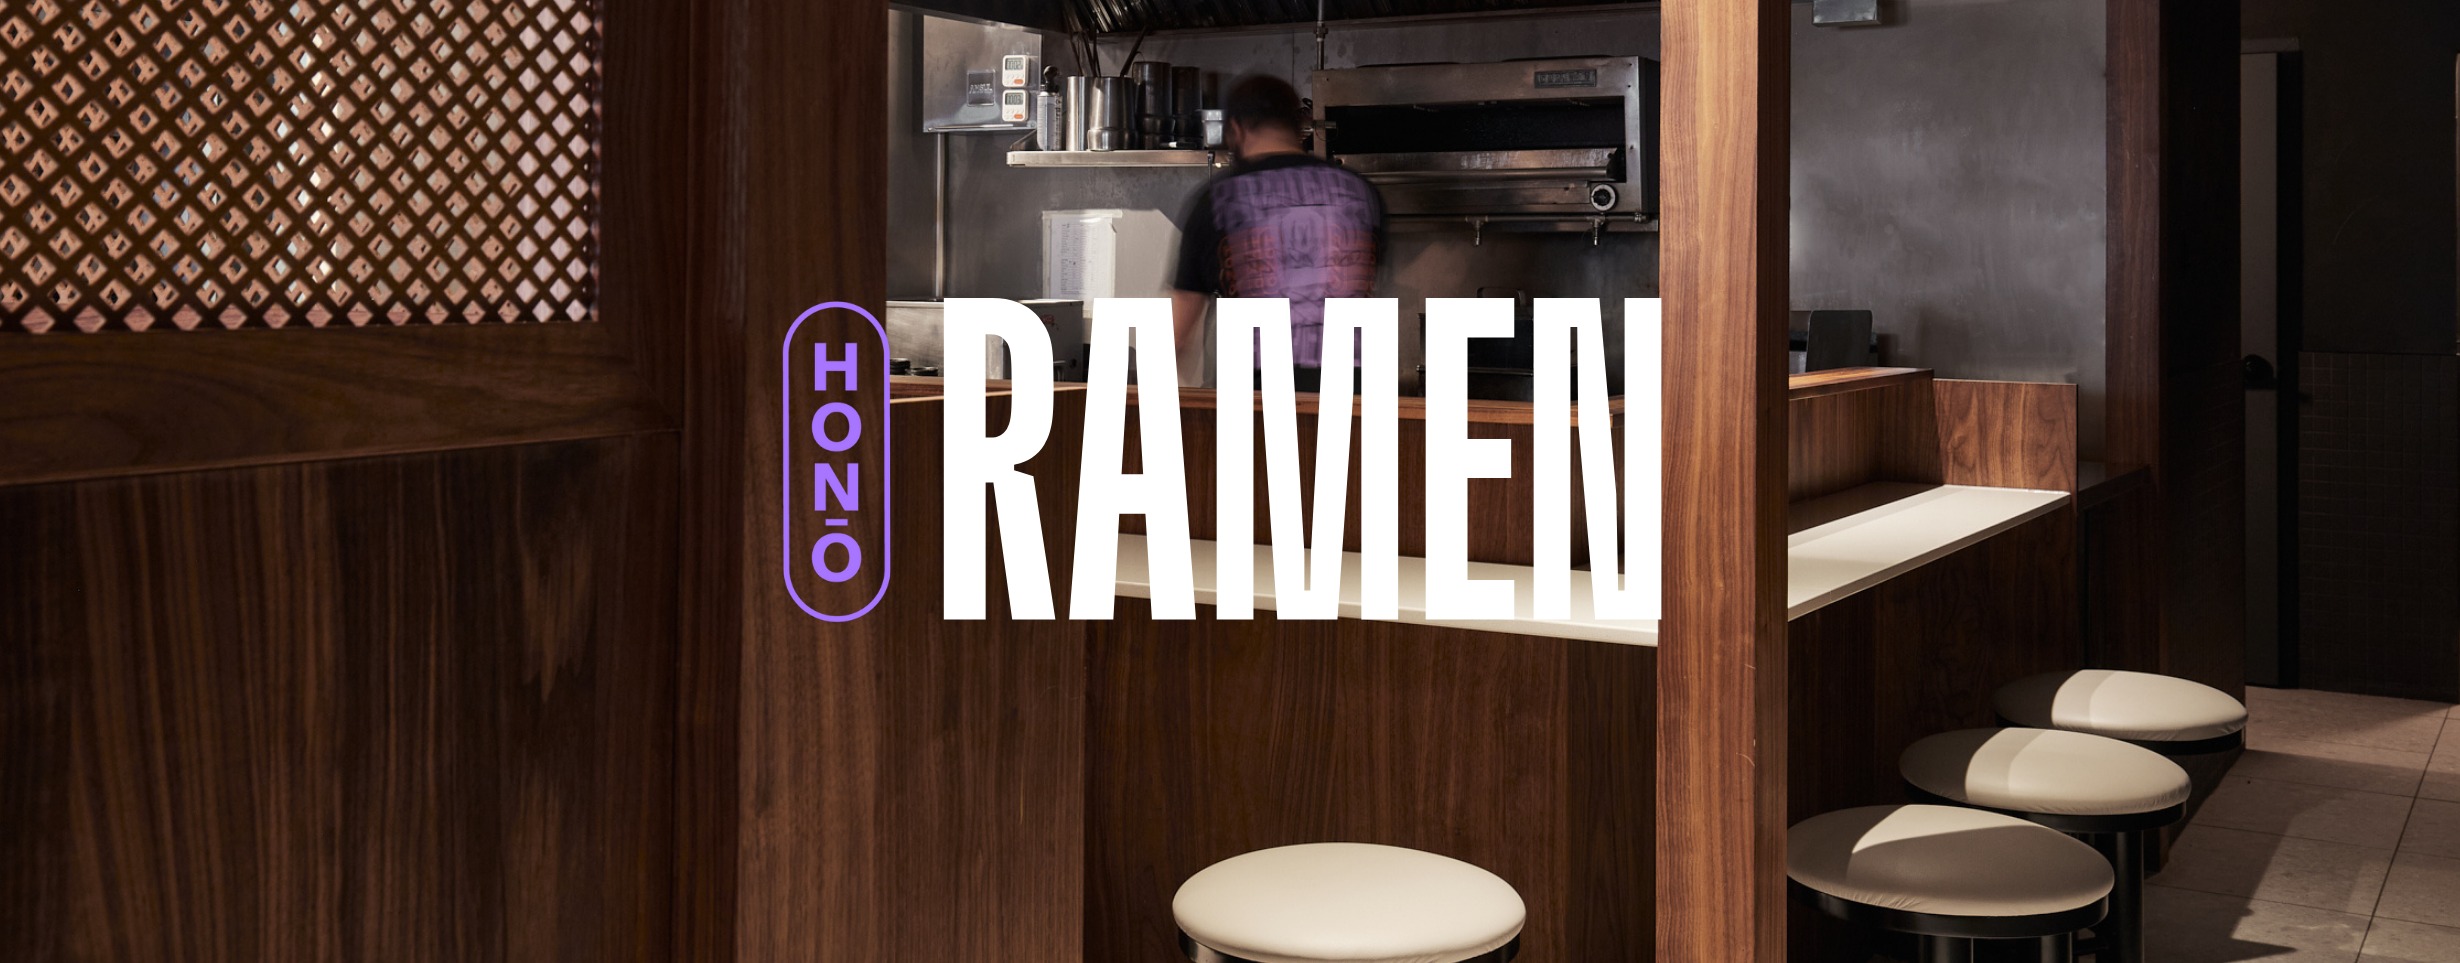 Honō Ramen - Restaurant